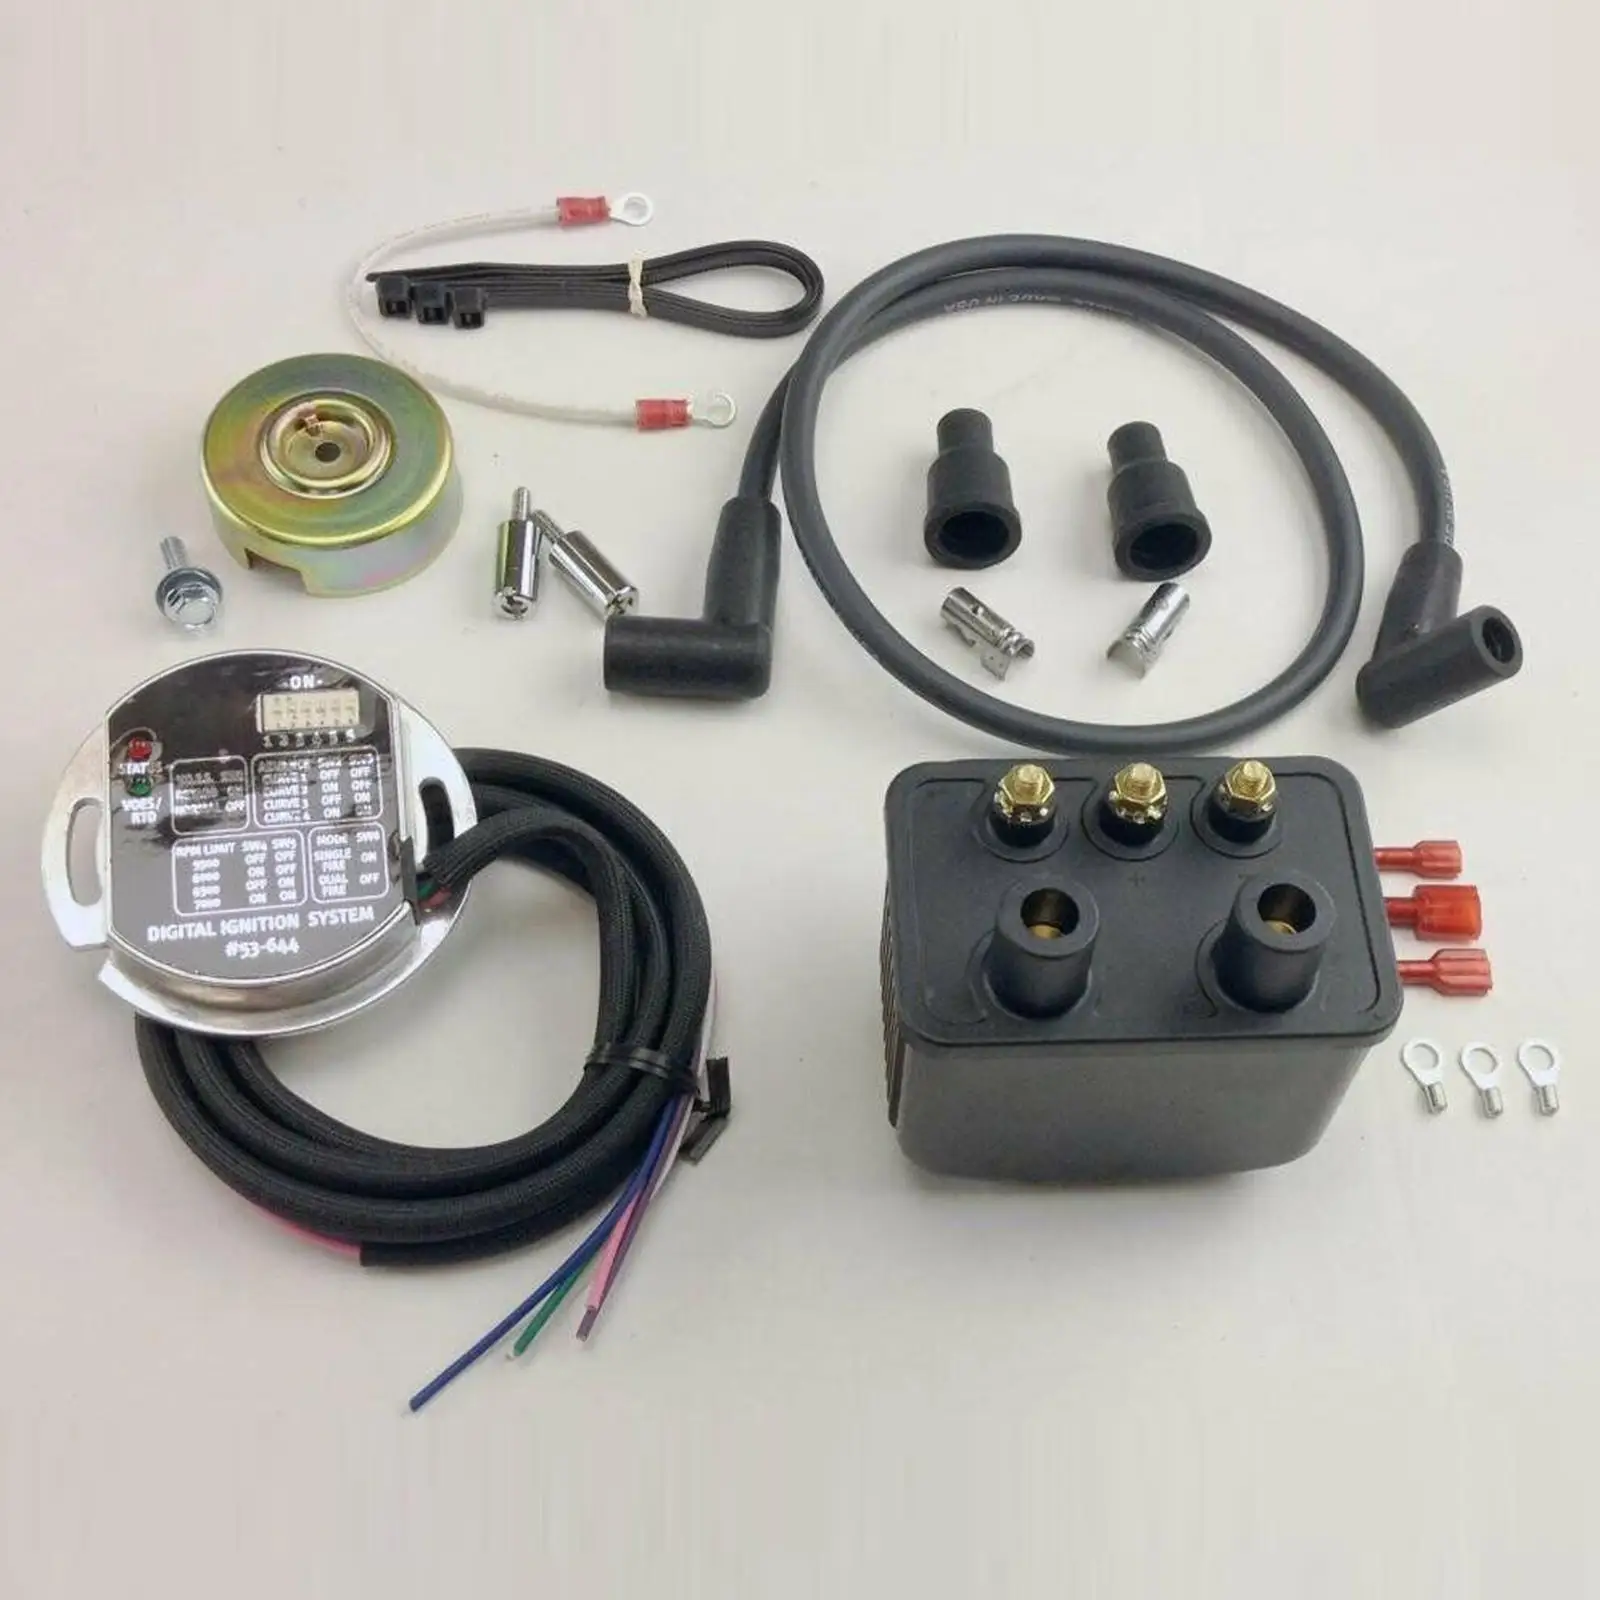 Electronic Ignition Kit Accessories for Harley Shovelhead Evolution